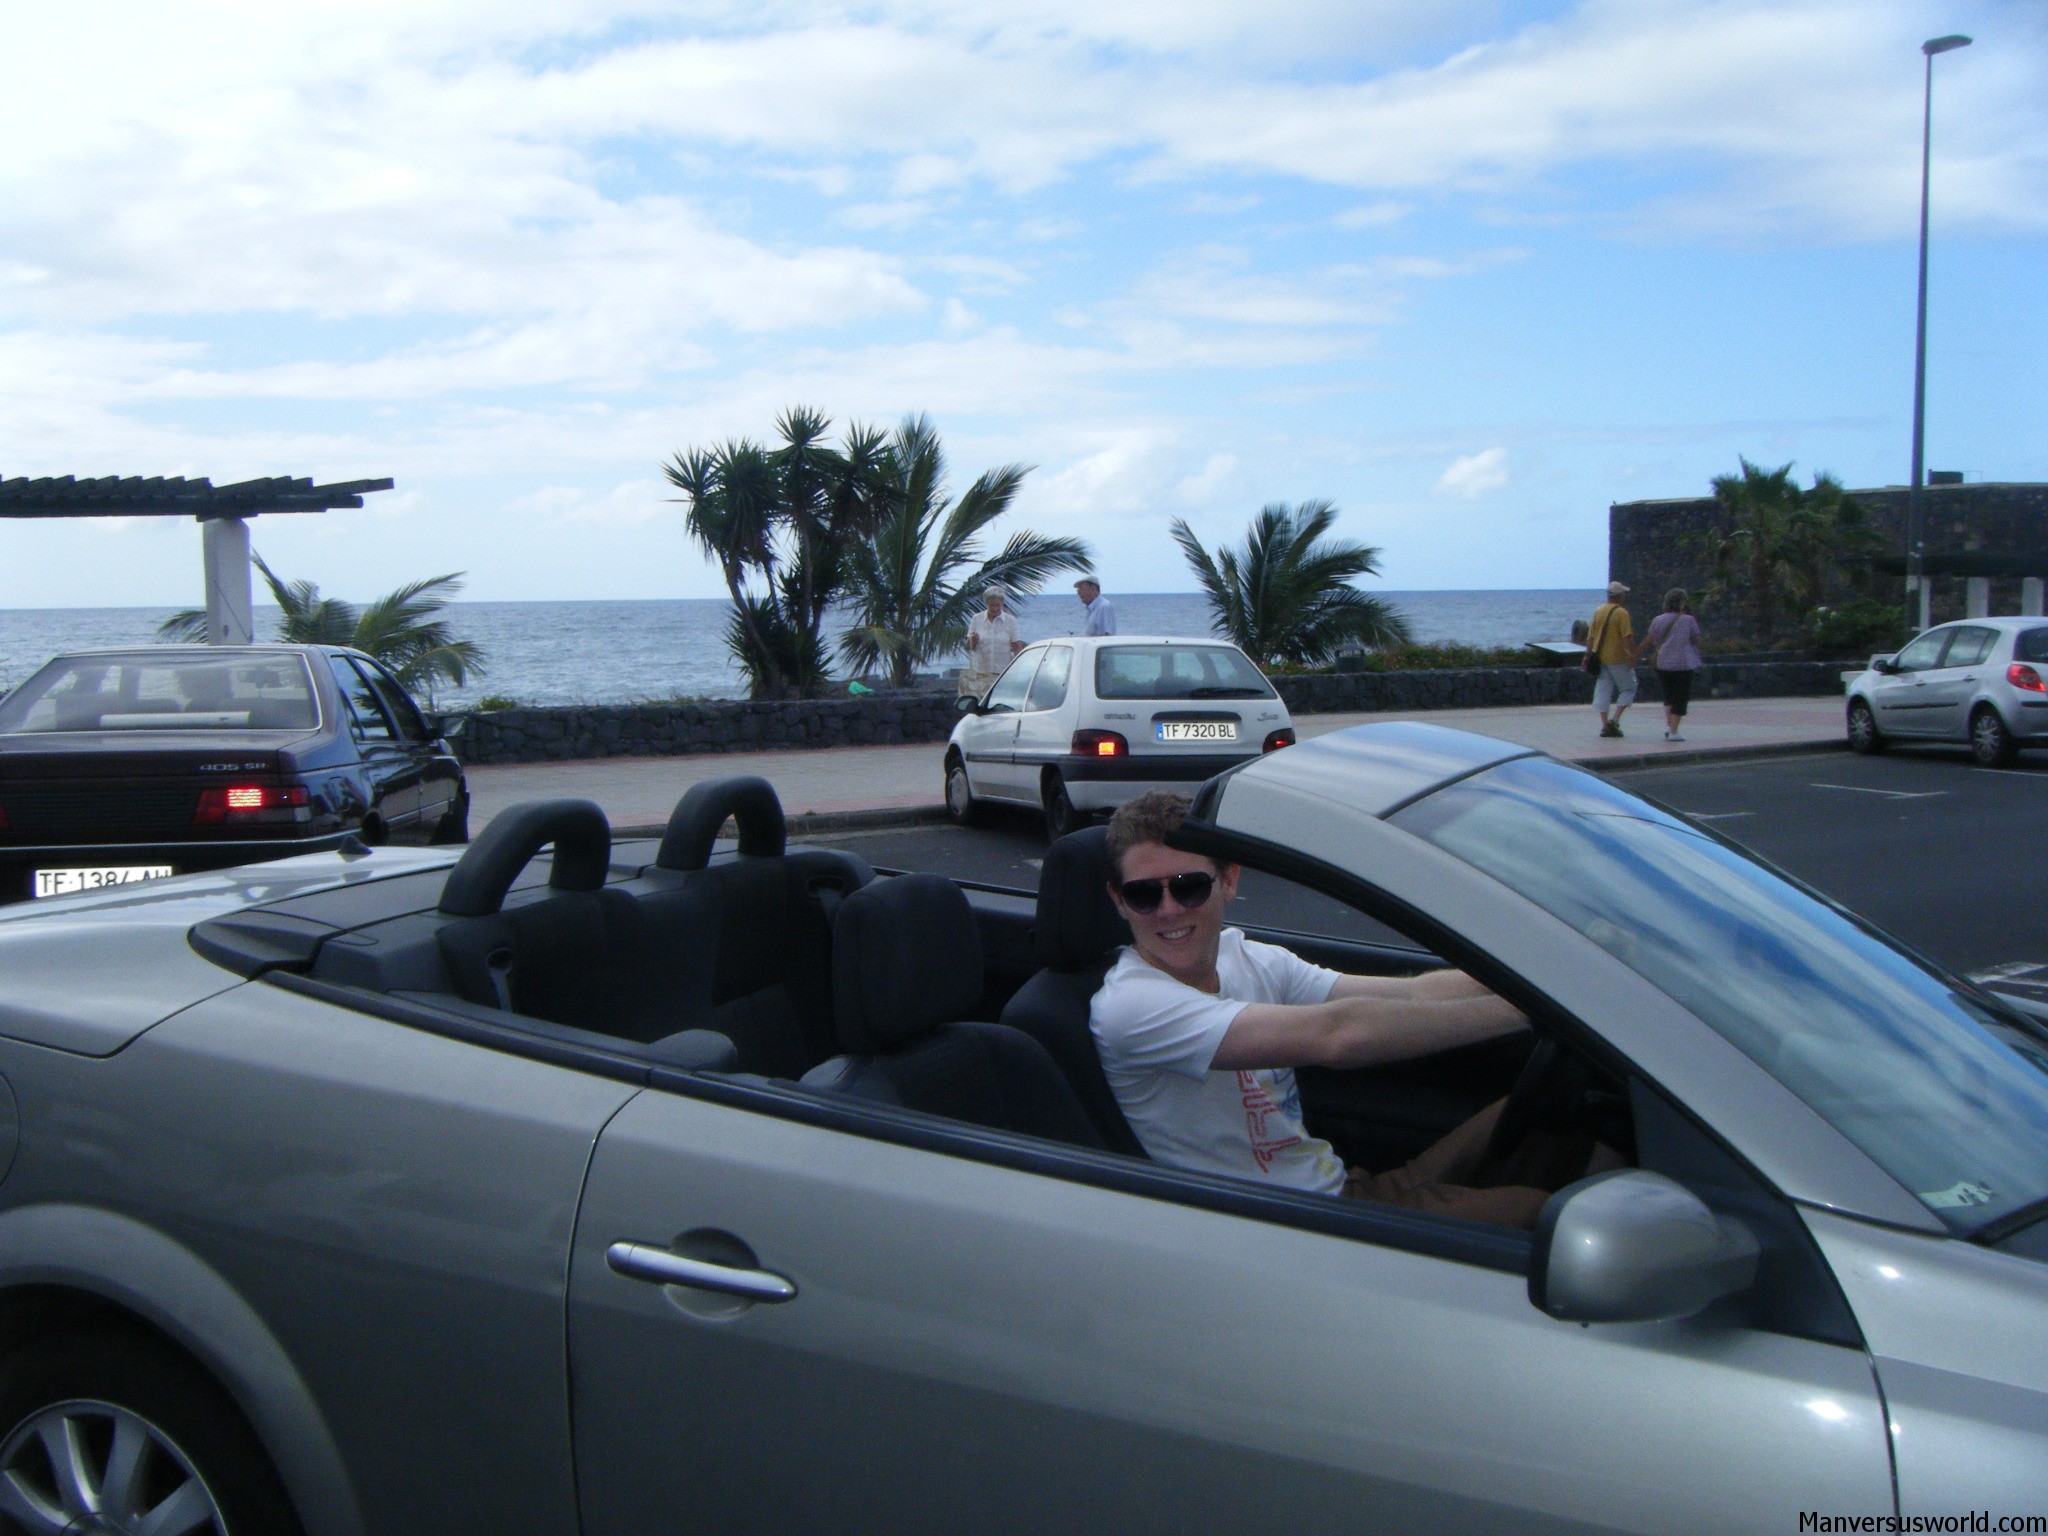 Me driving a conveertible in Tenerife.